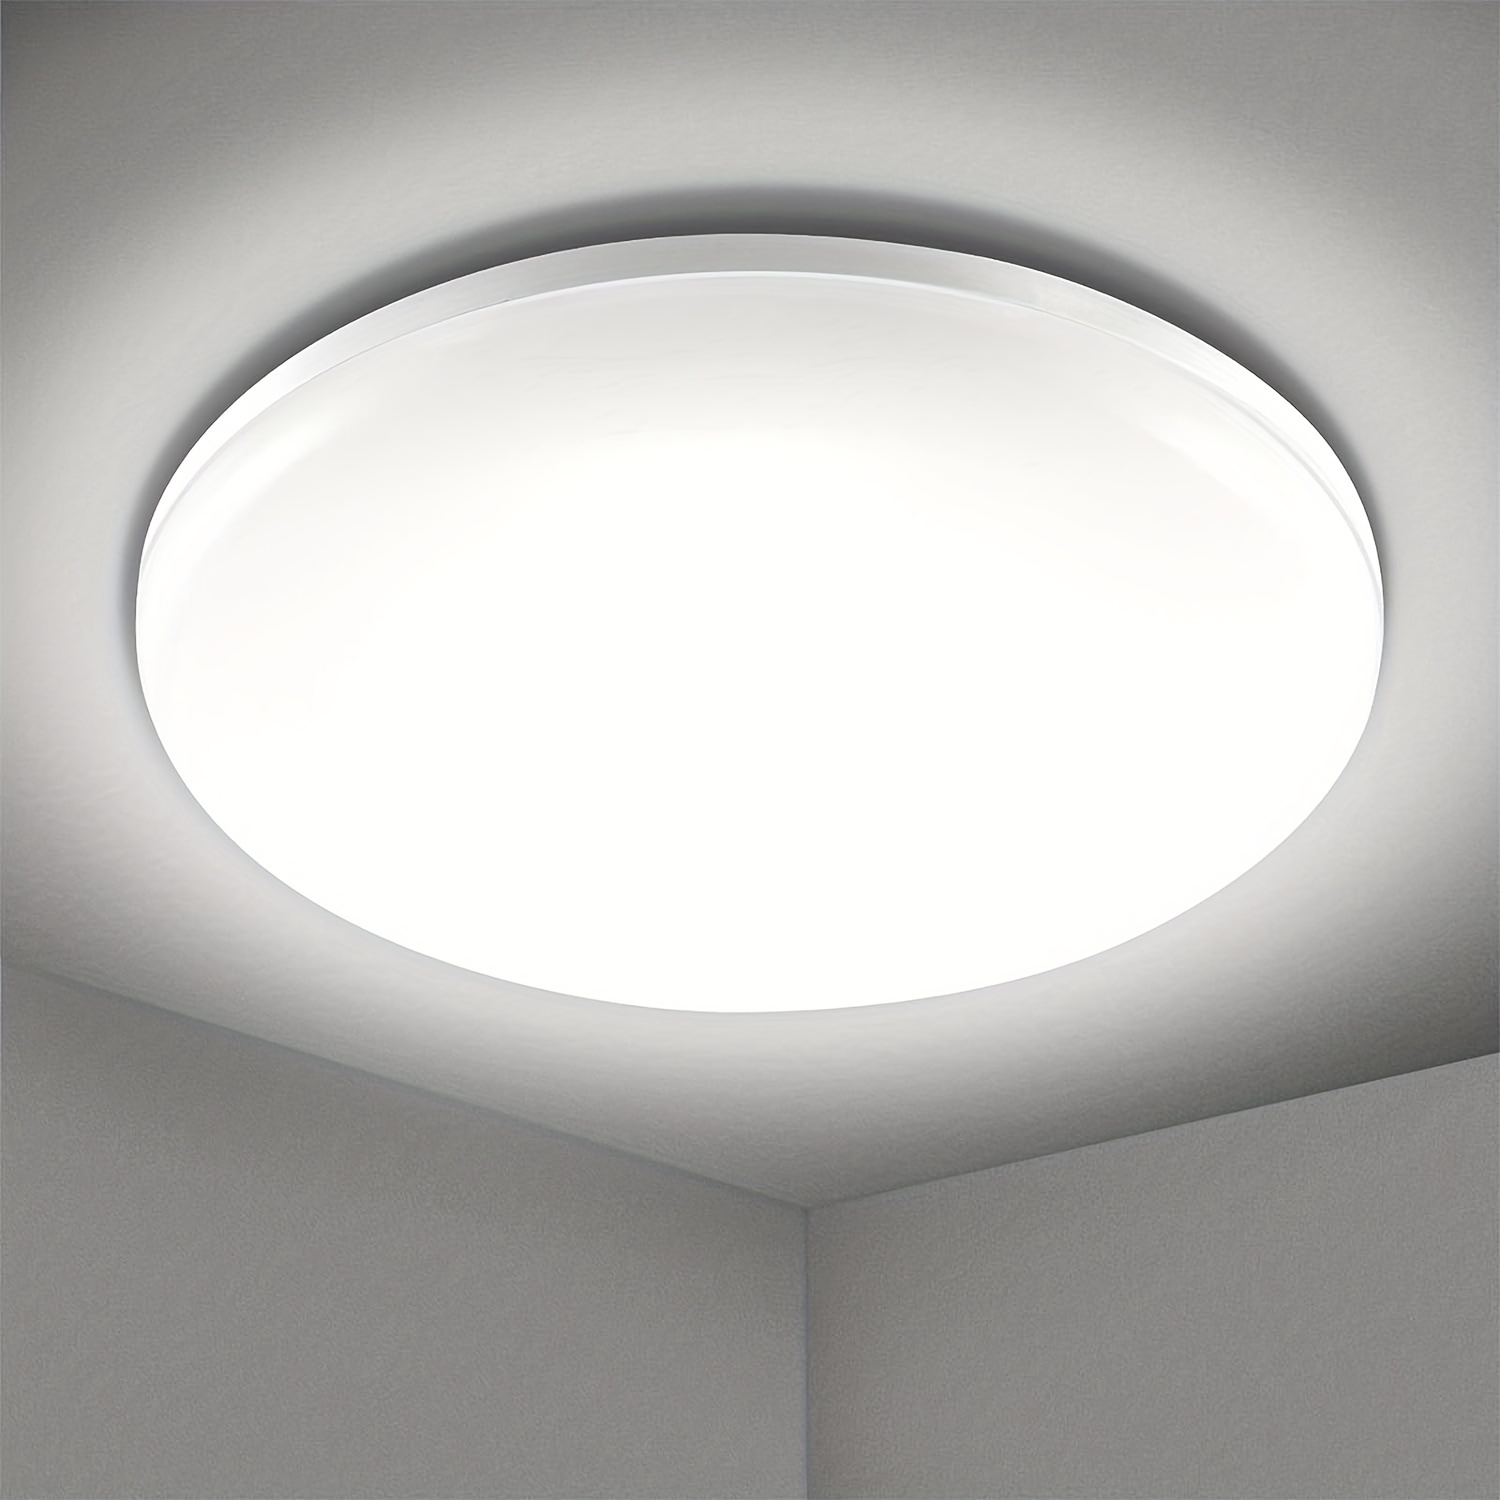 12 Inch 24W LED Ceiling Light Fixture Flush Mount, Daylight White 5000K,  Flat Round LED Ceiling Light, 3200LM, Black Ceiling Lighting Low Profile  for